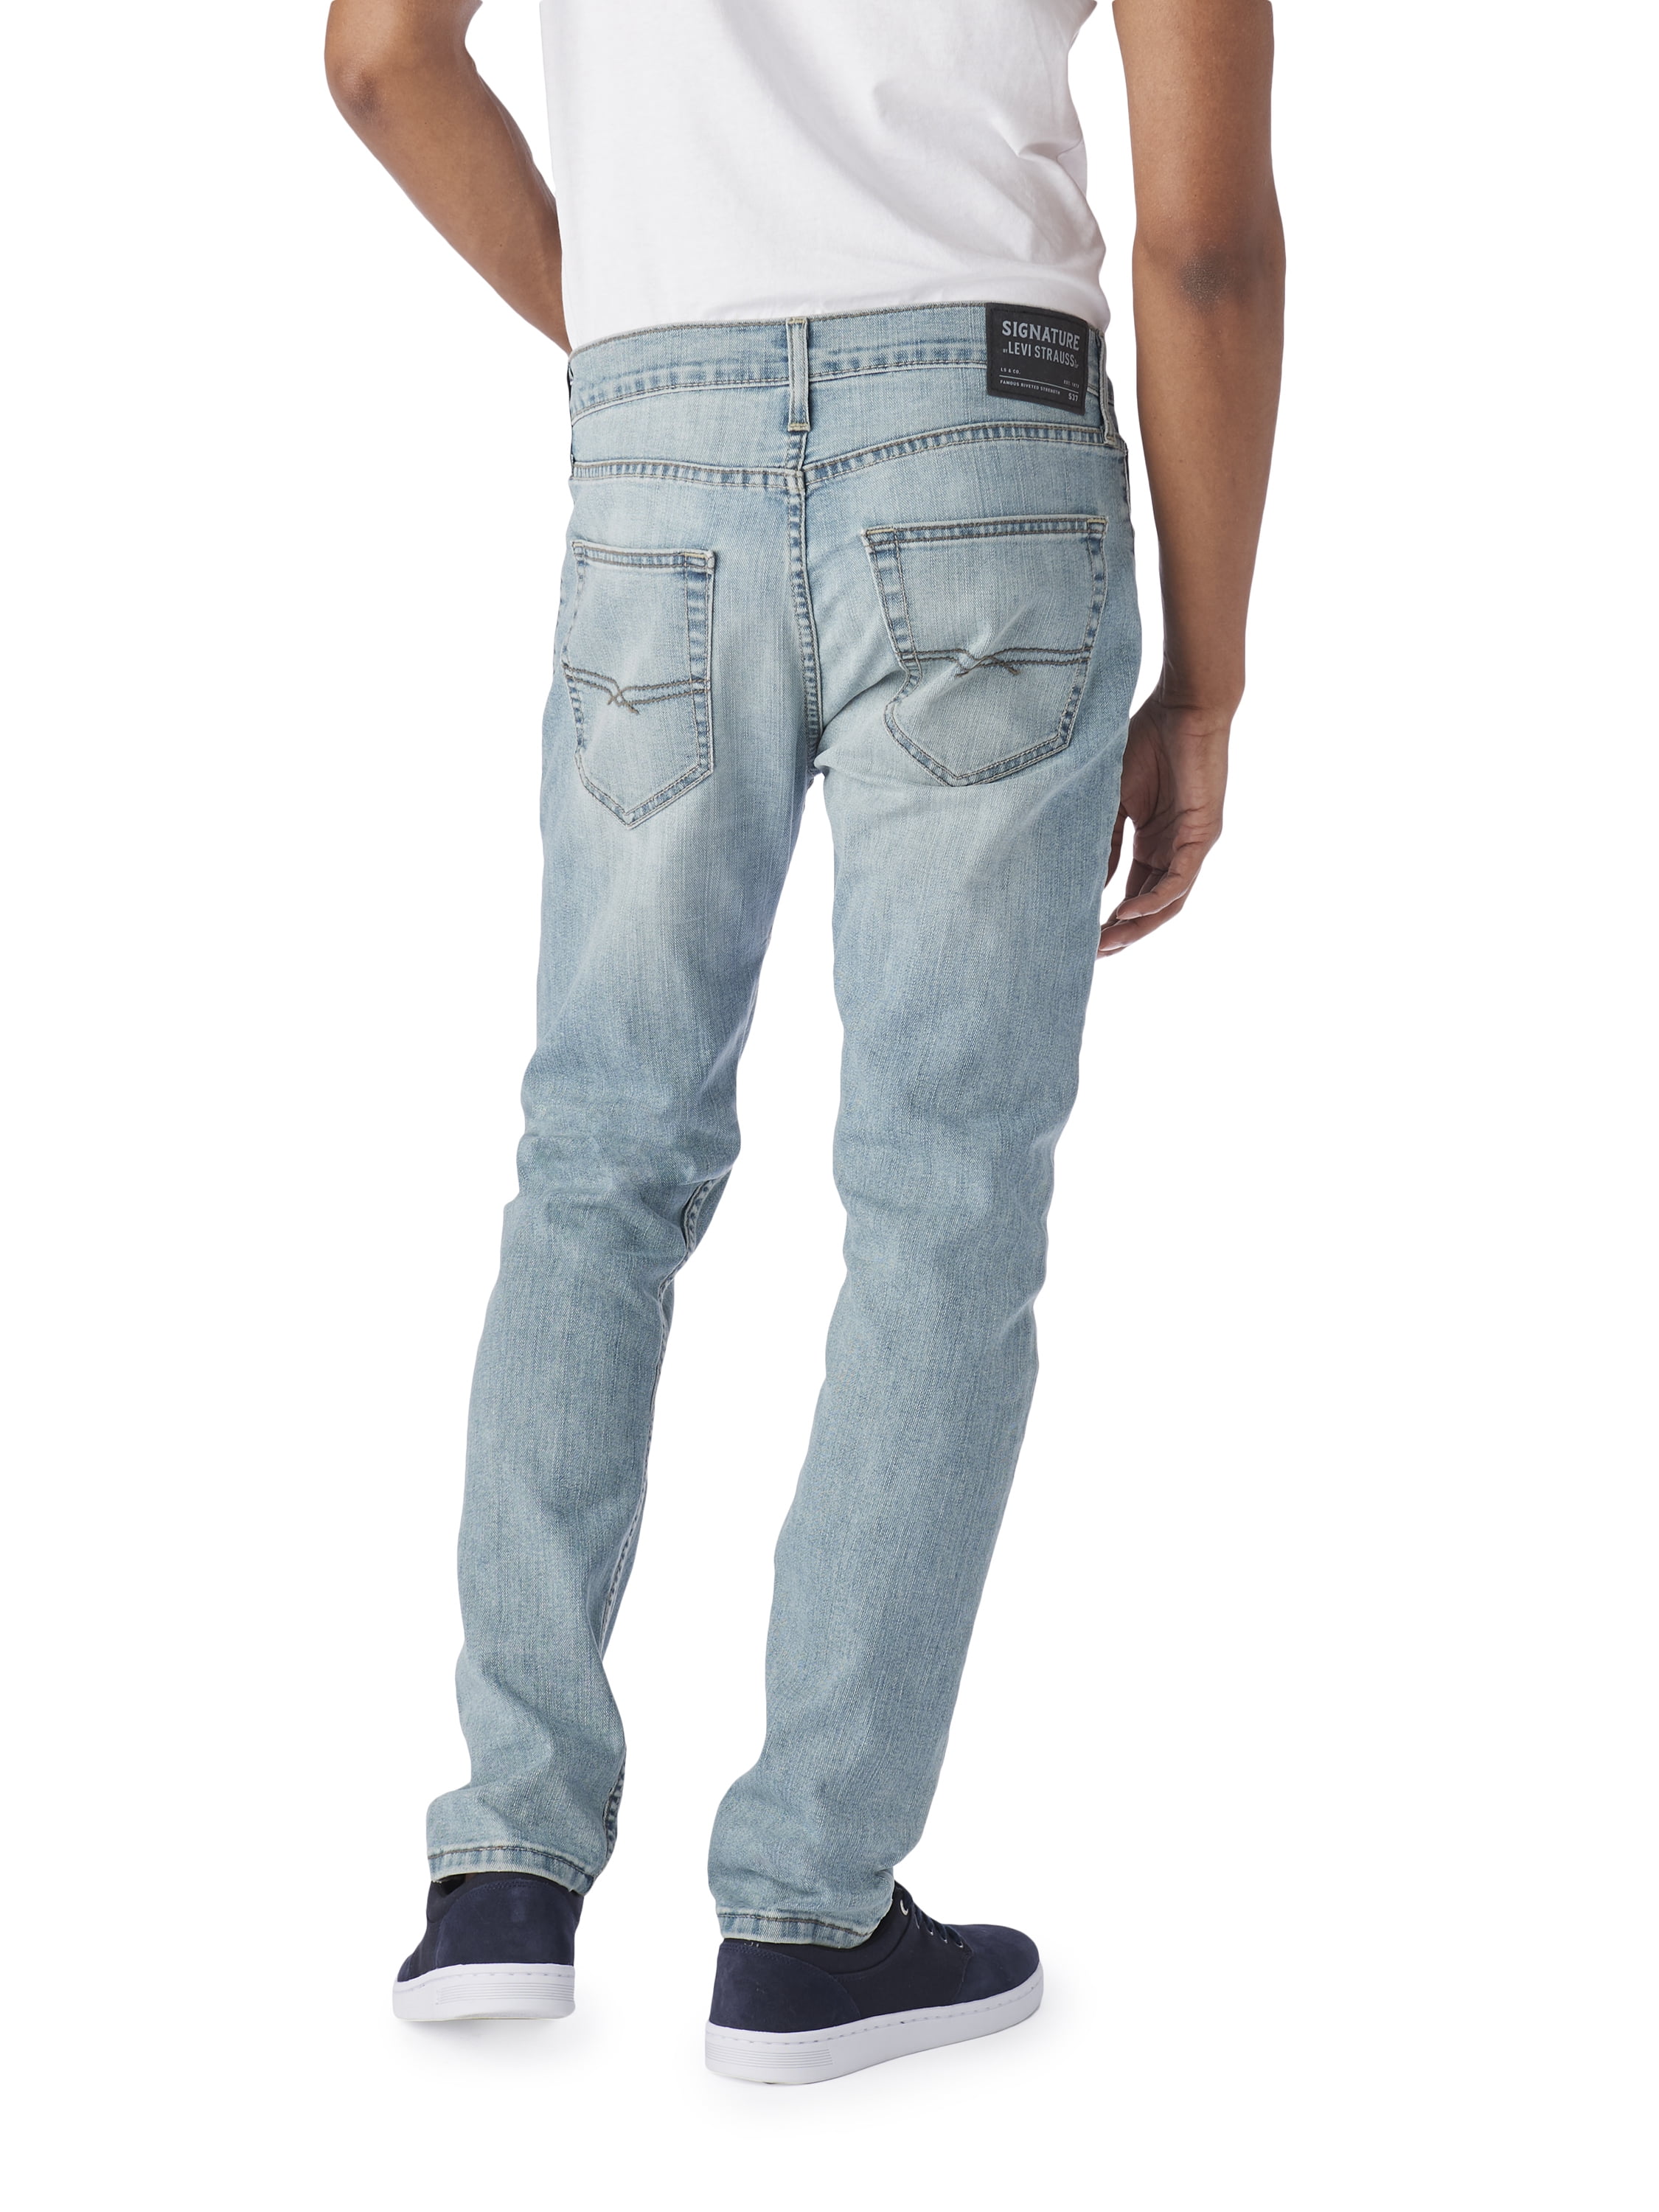 Levi Strauss \u0026 Co. Men's Slim Fit Jeans 